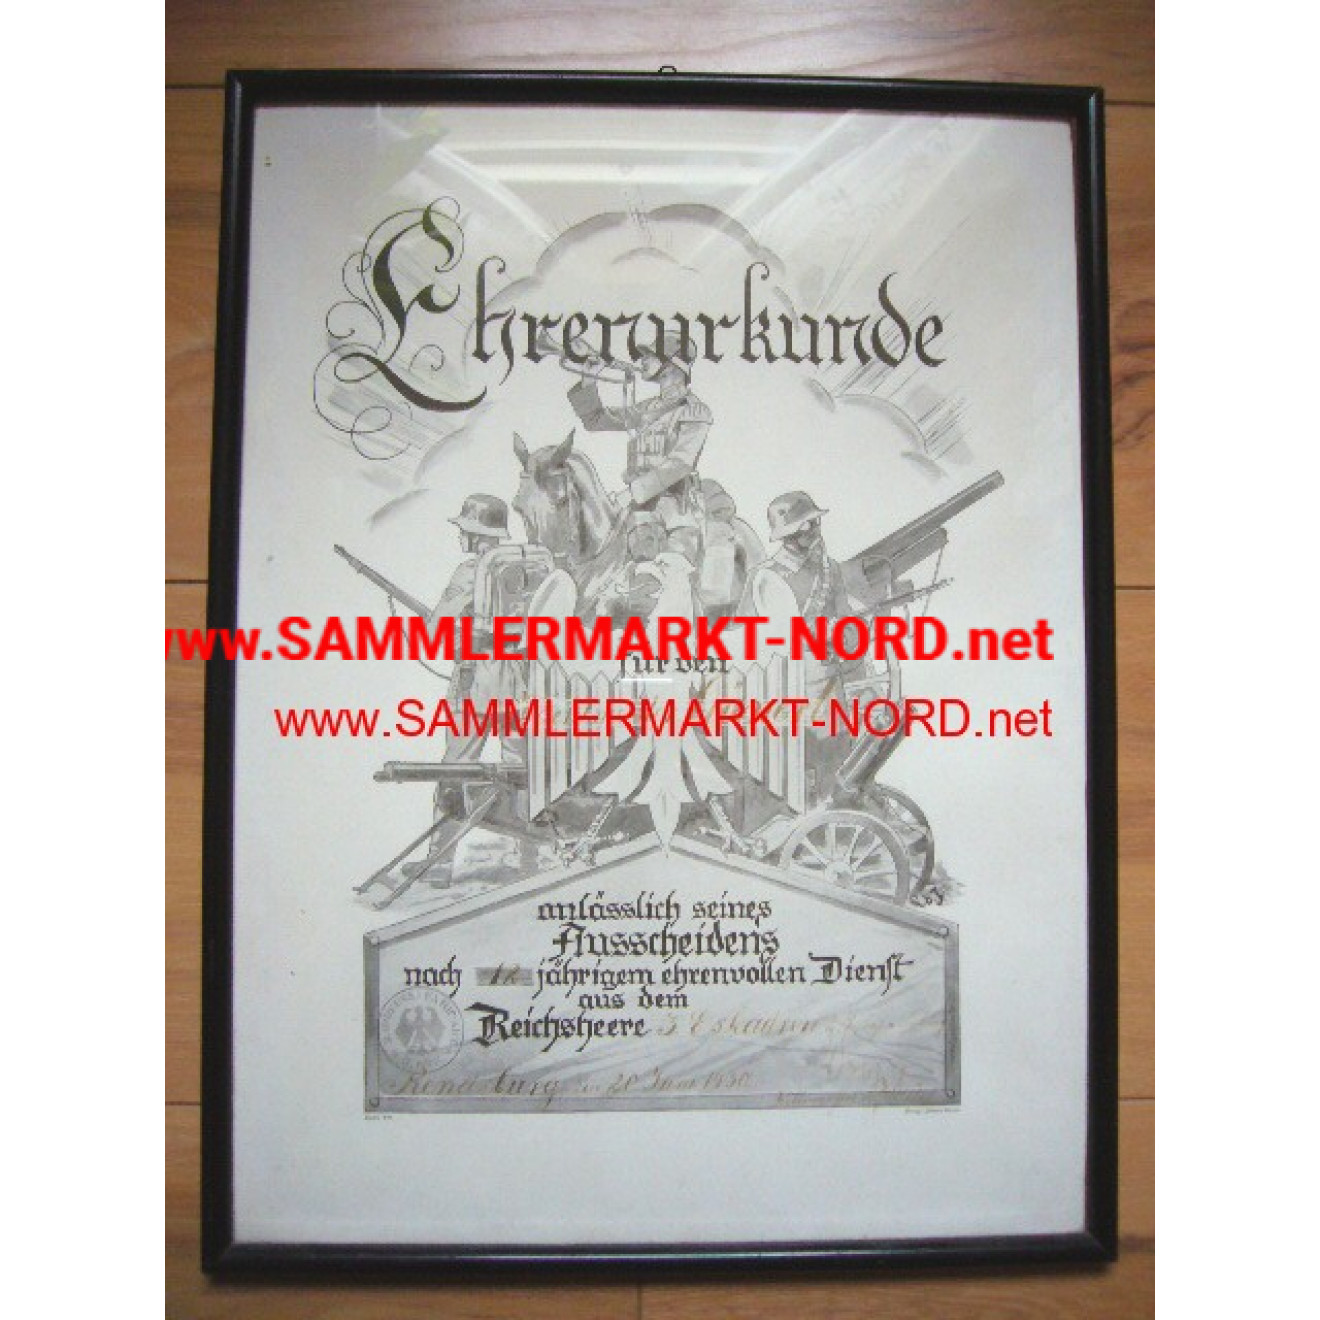 Certificate of commendation - 2 (Preuss). Fahrabteilung Rendsbur